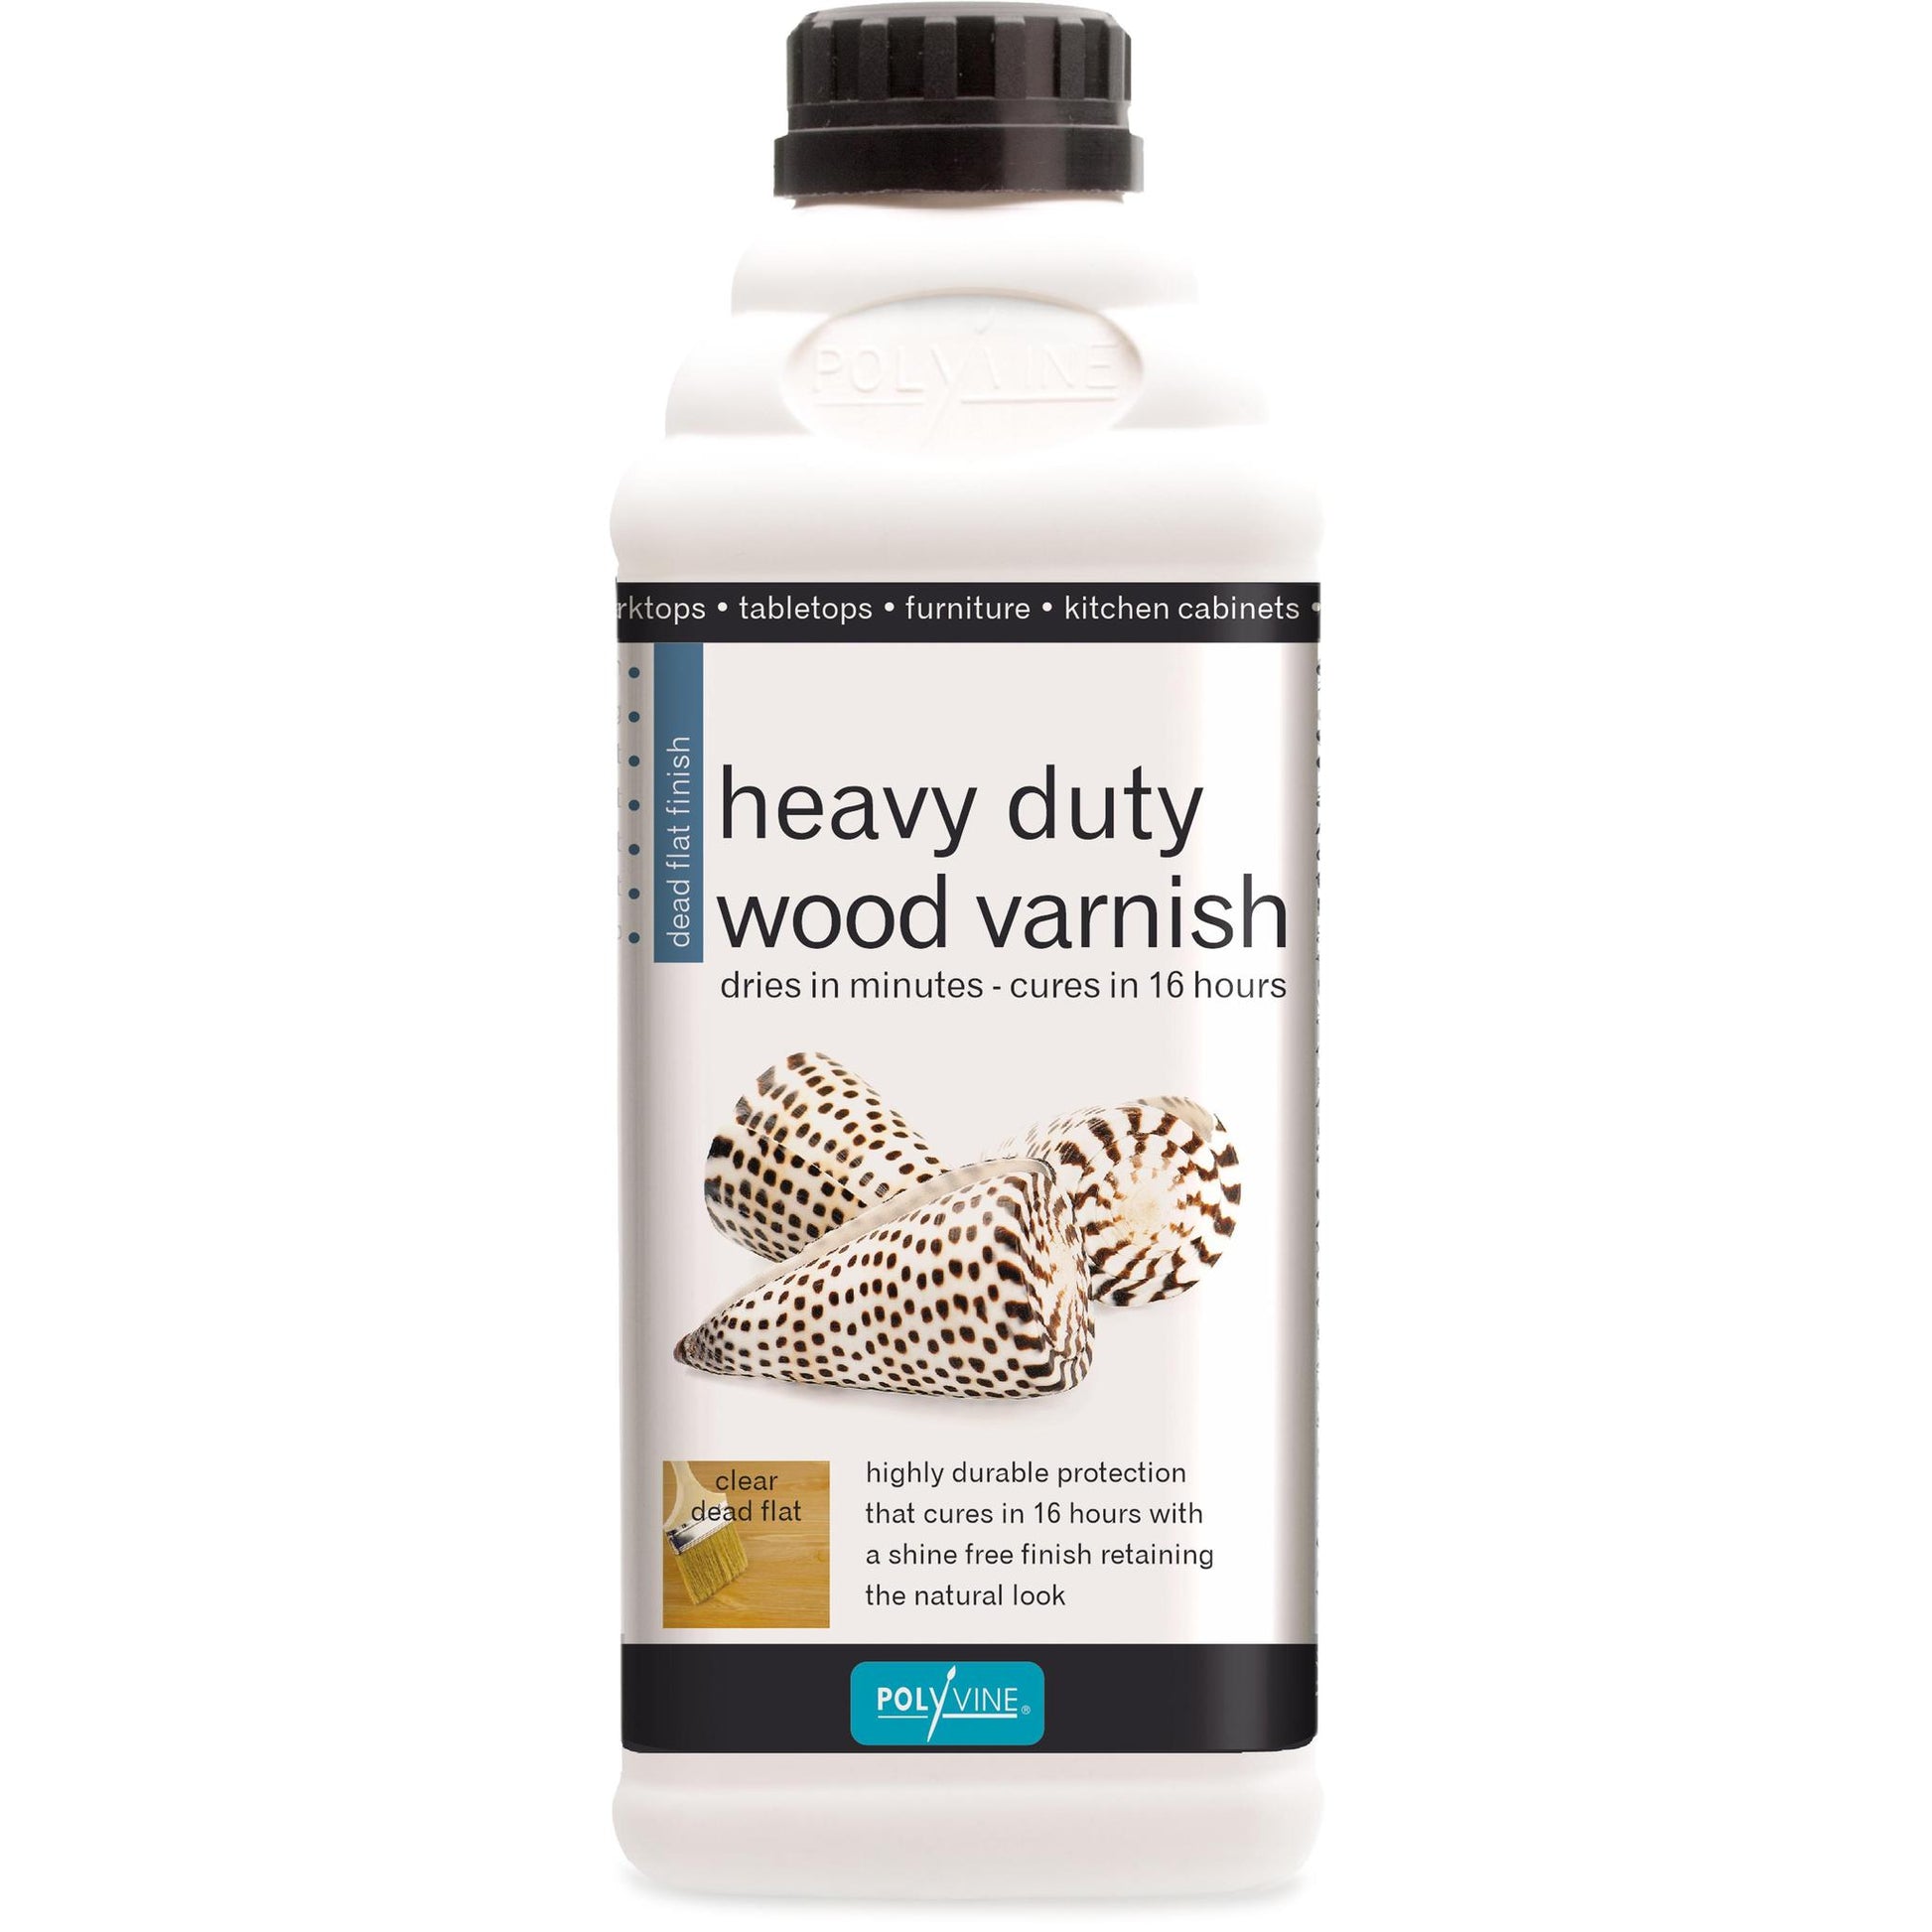 Polyvine - Heavy Duty Wood Varnish, Dead Flat Clear